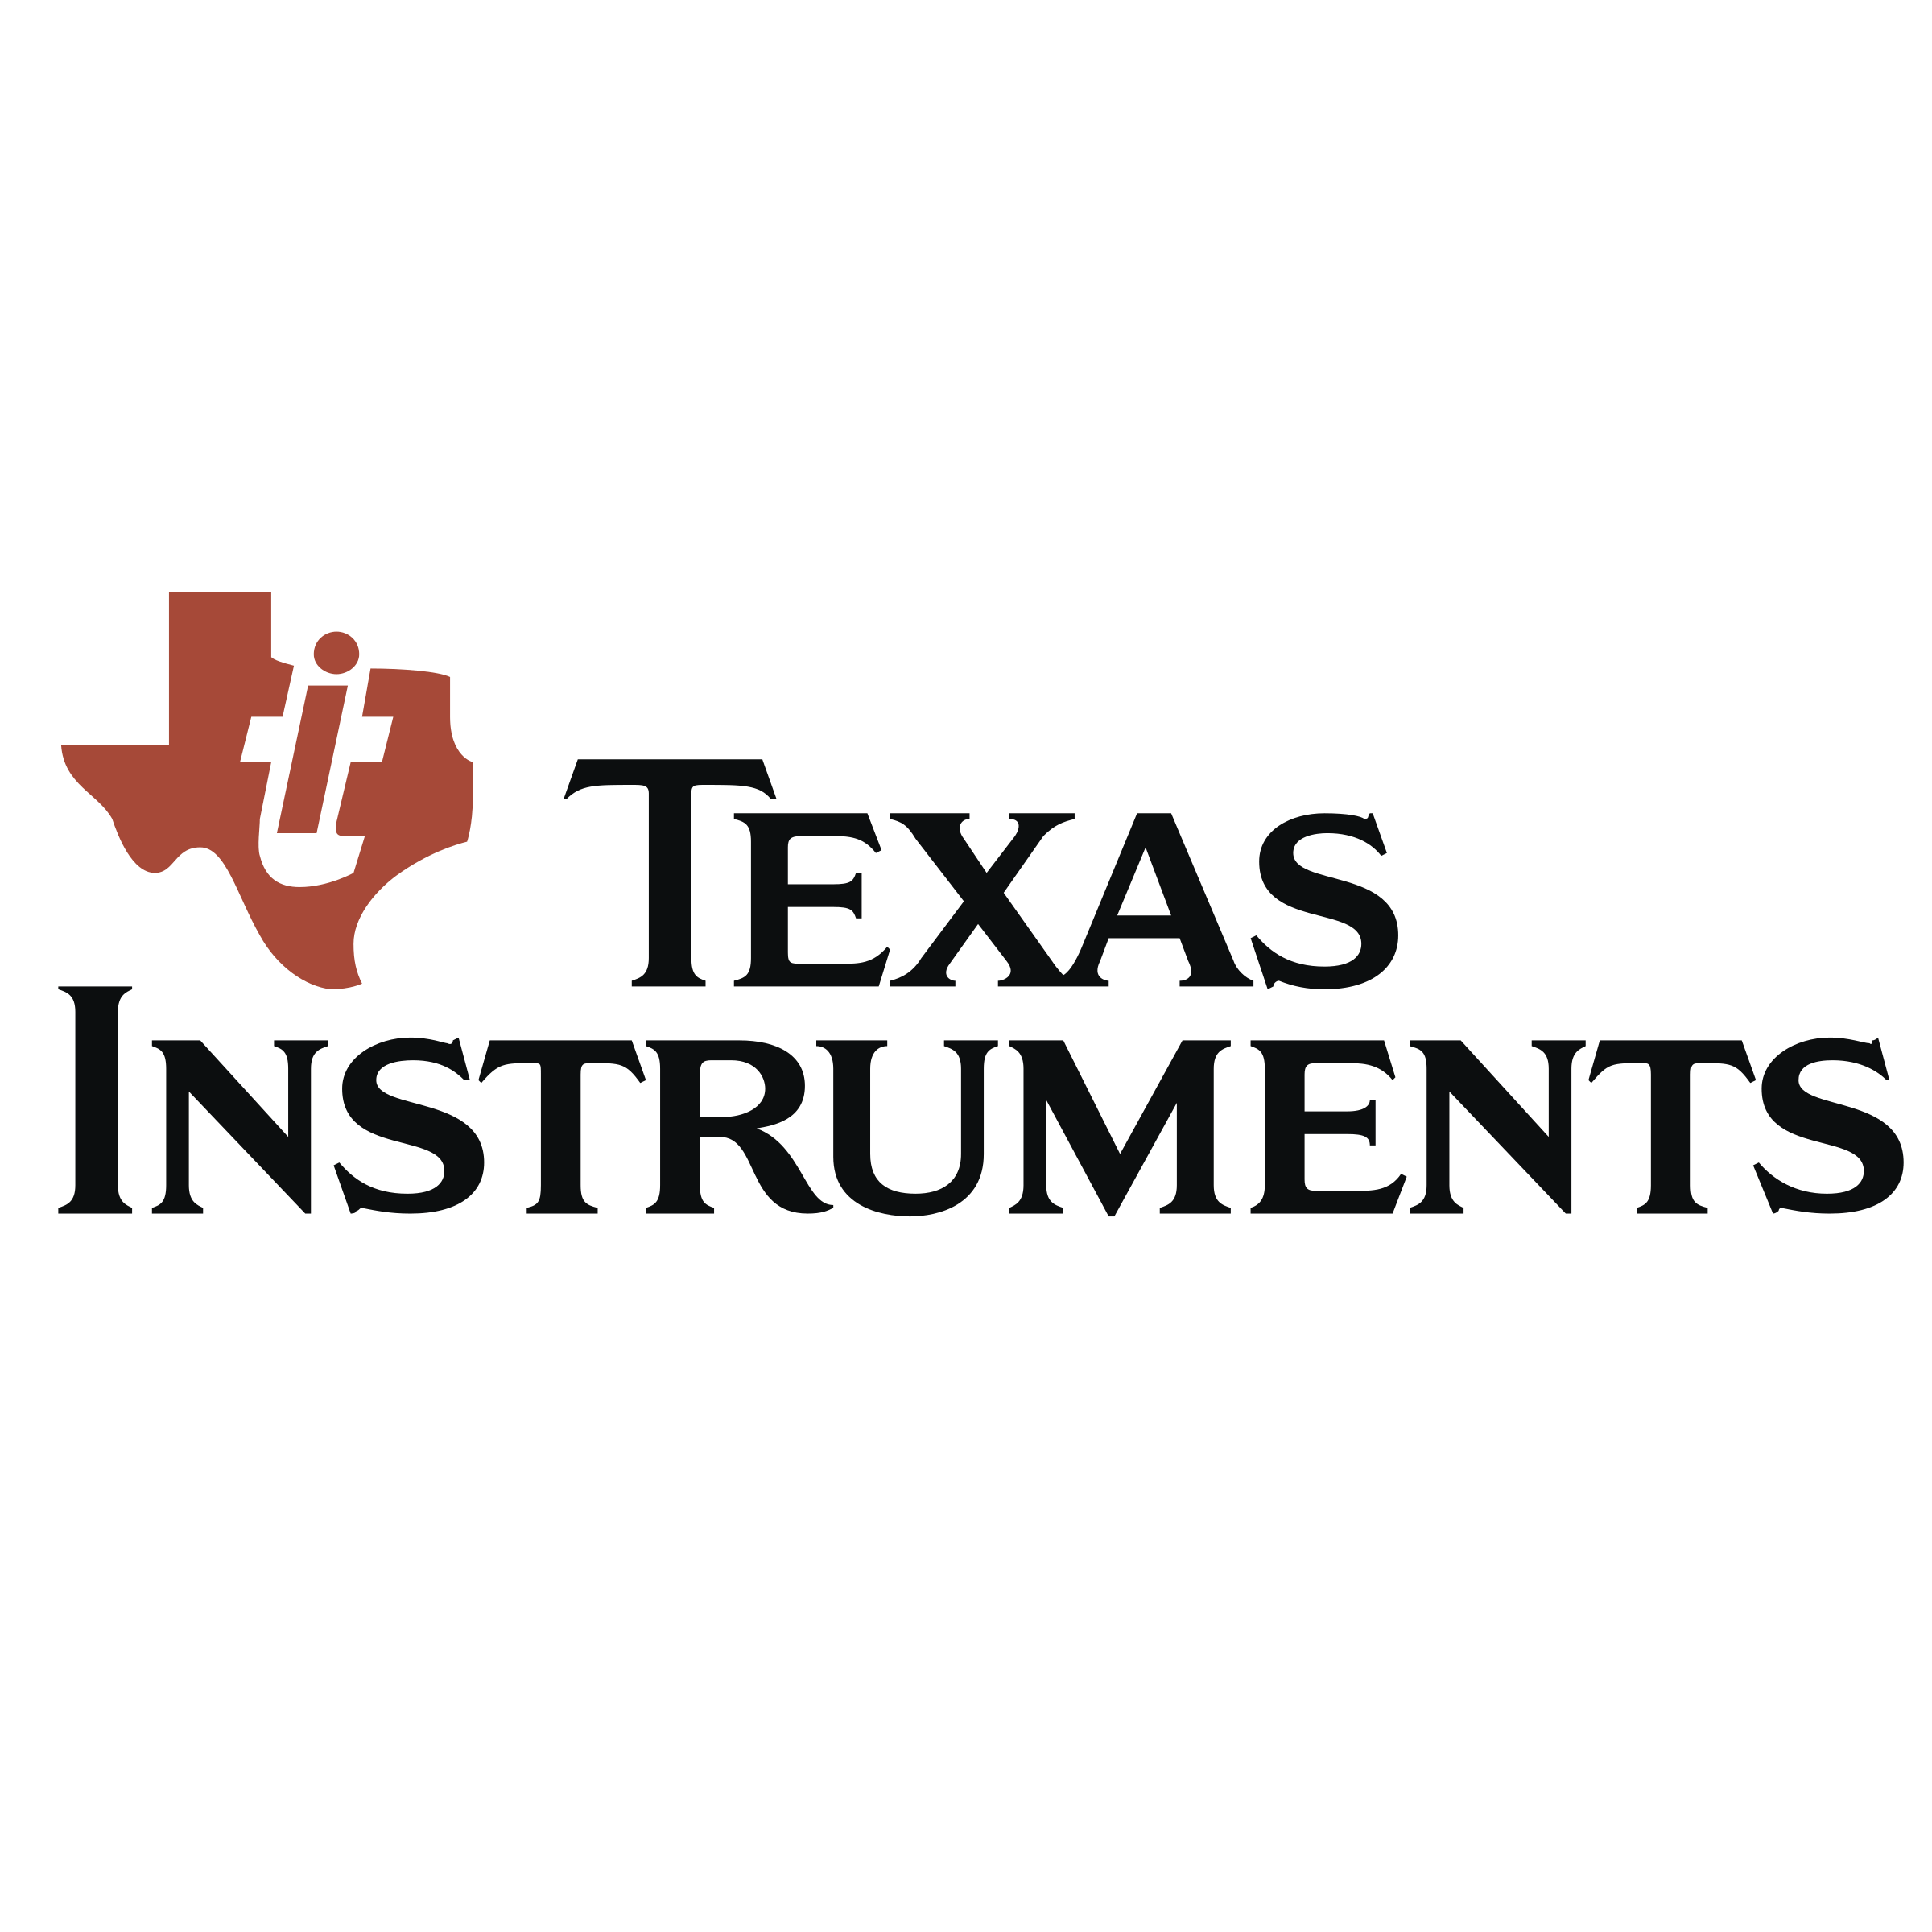 Texas Instruments Logo - Texas Instruments Logo PNG Transparent & SVG Vector